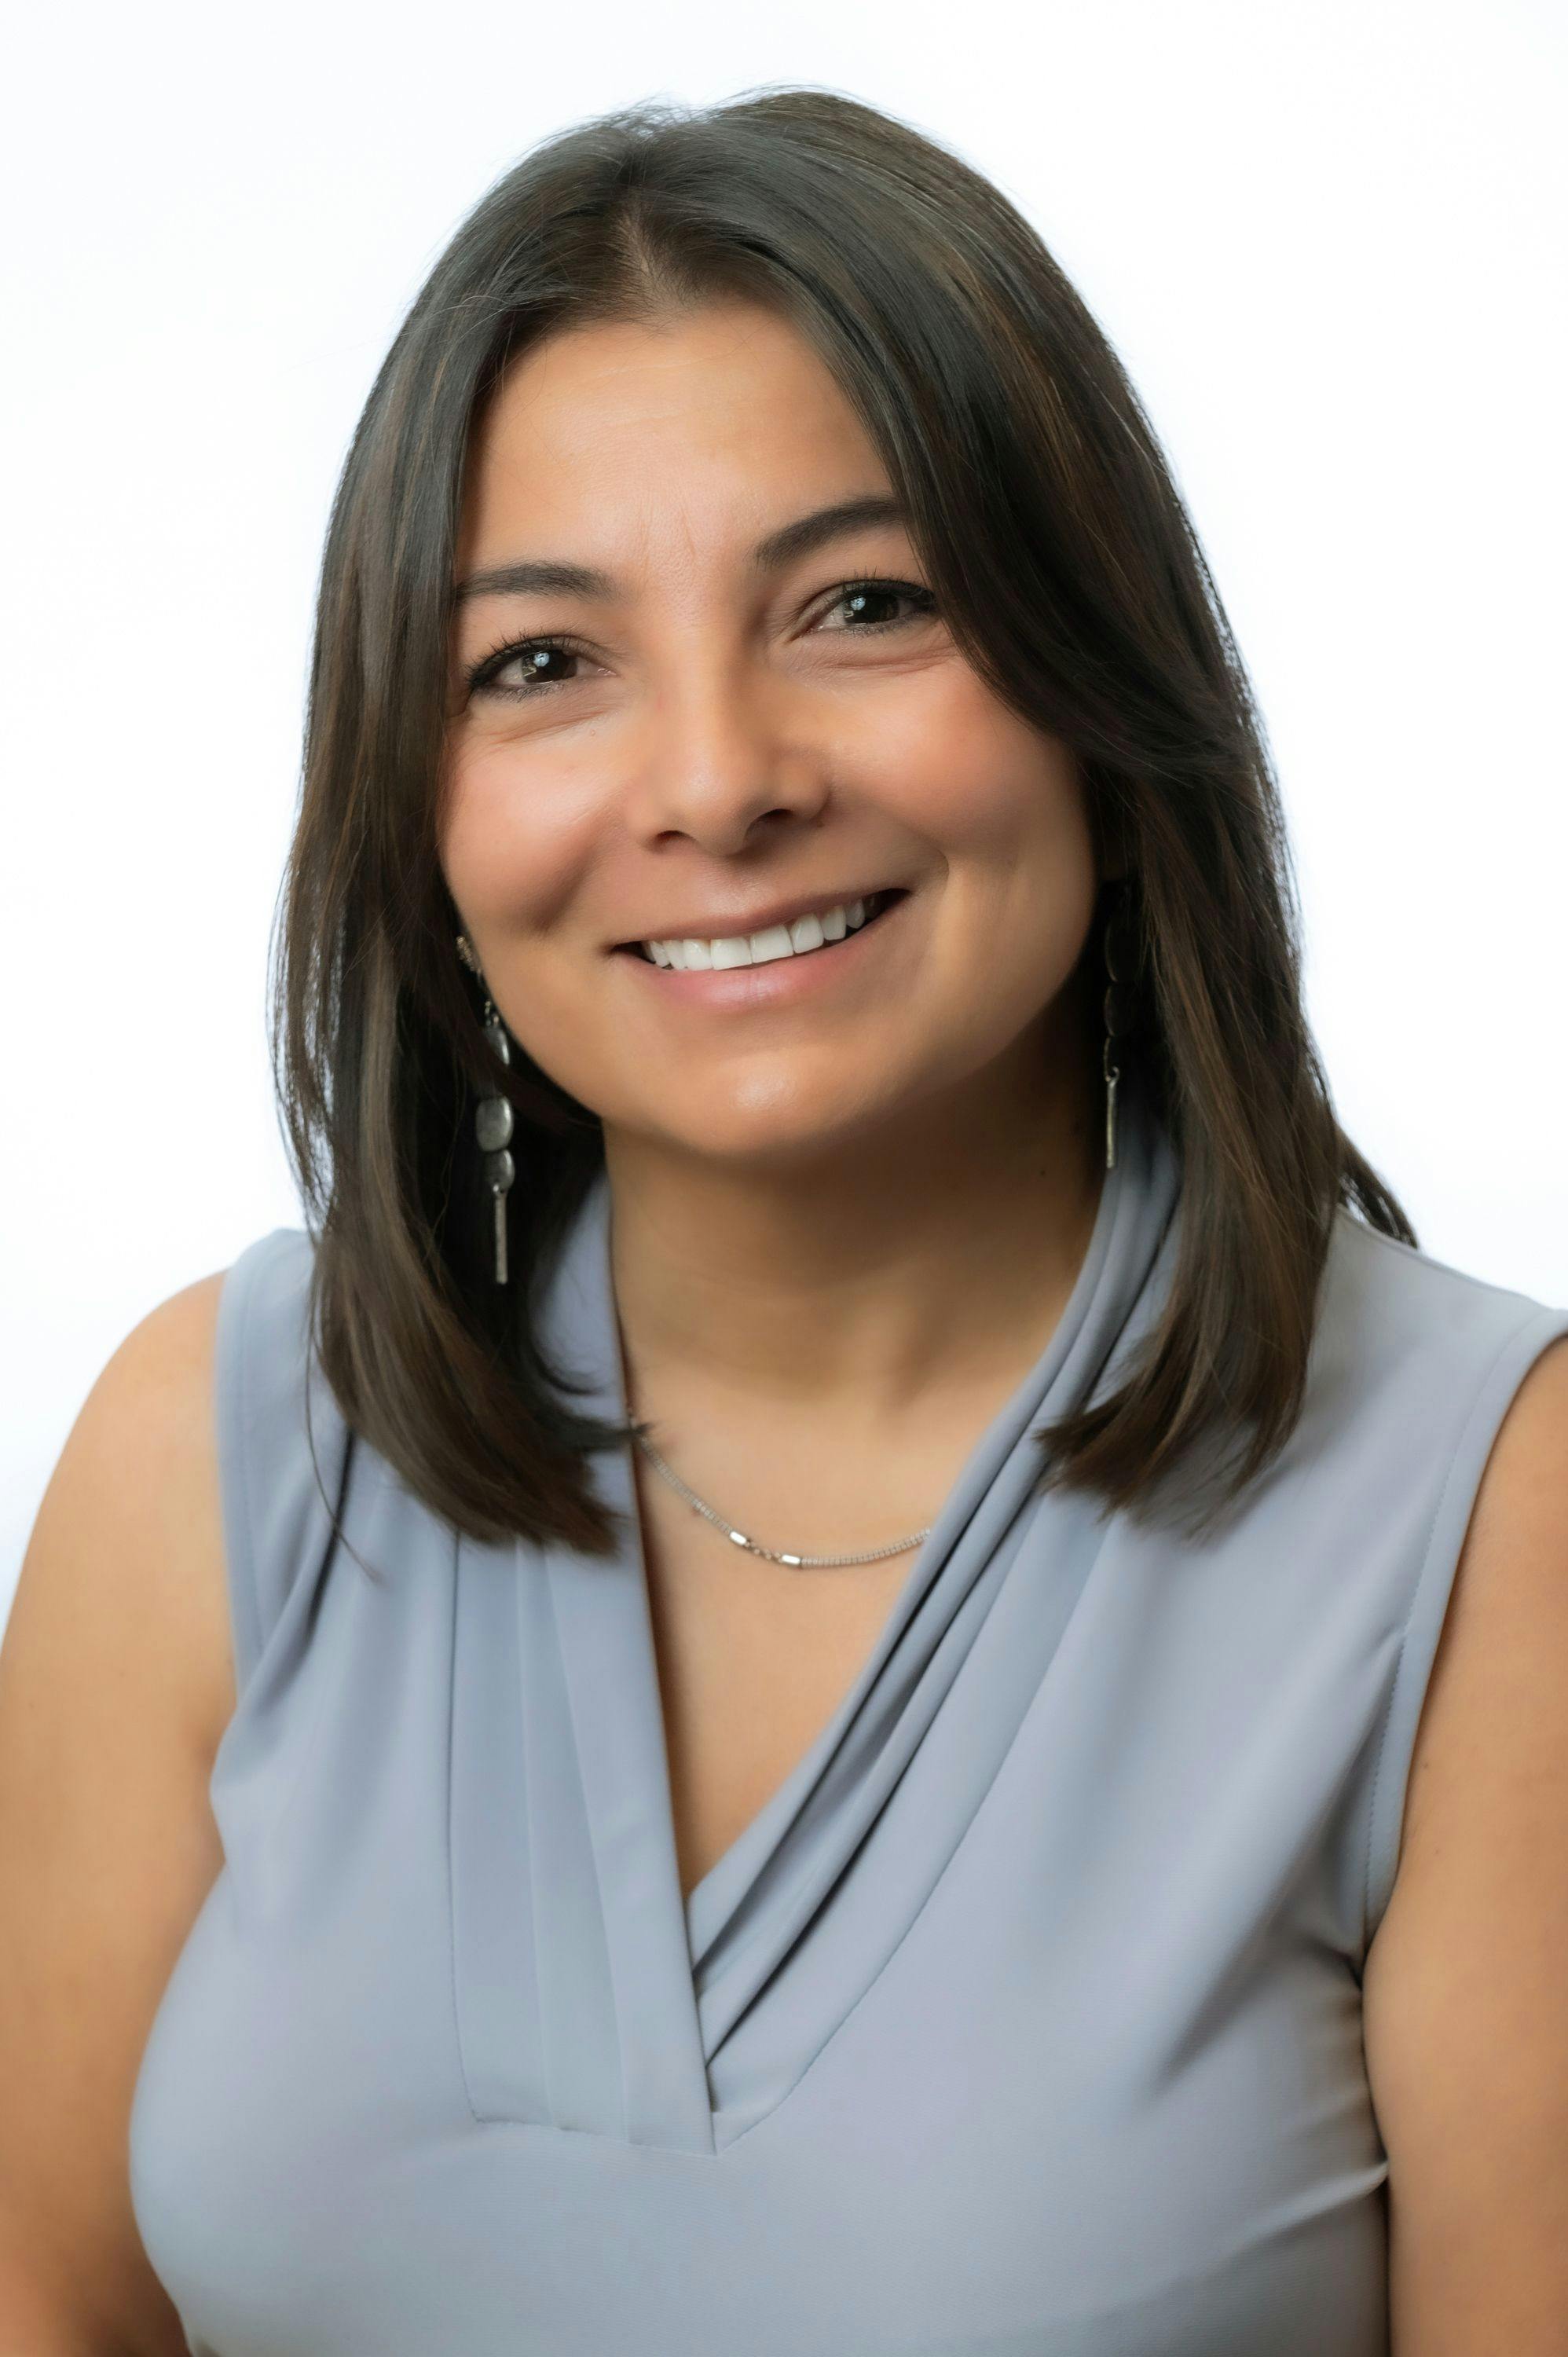 Emerging Leaders in Healthcare: Nora Lozano-Evjen of Equality Health